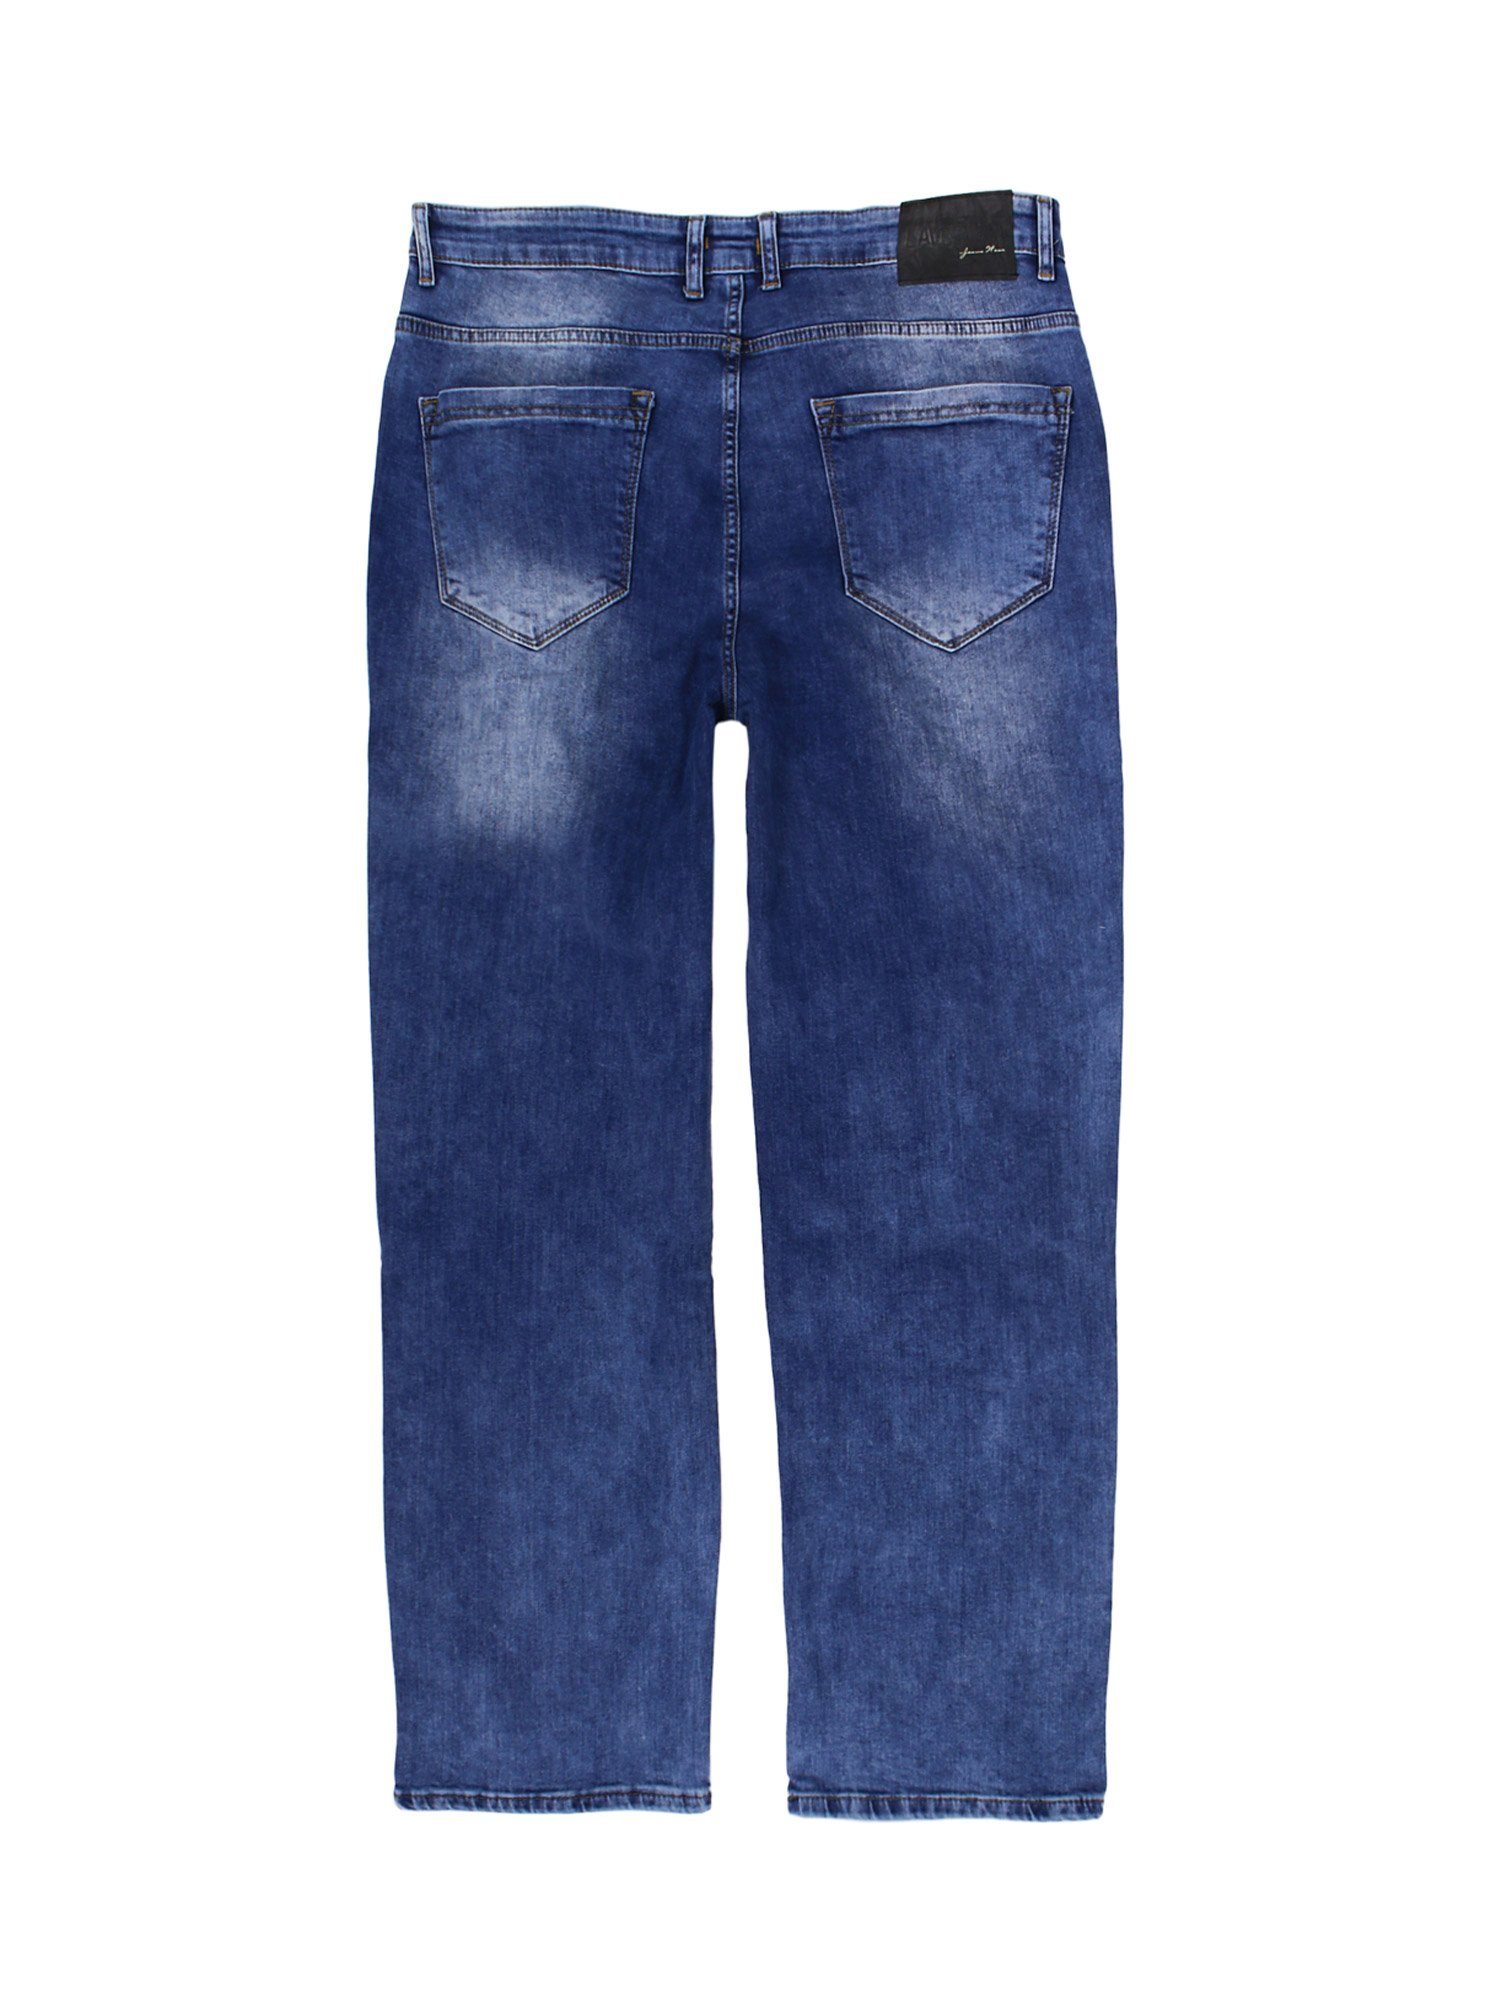 Lavecchia Comfort-fit-Jeans Übergrößen Herren Elasthan Jeanshose mit Stretch LV-501 stoneblau